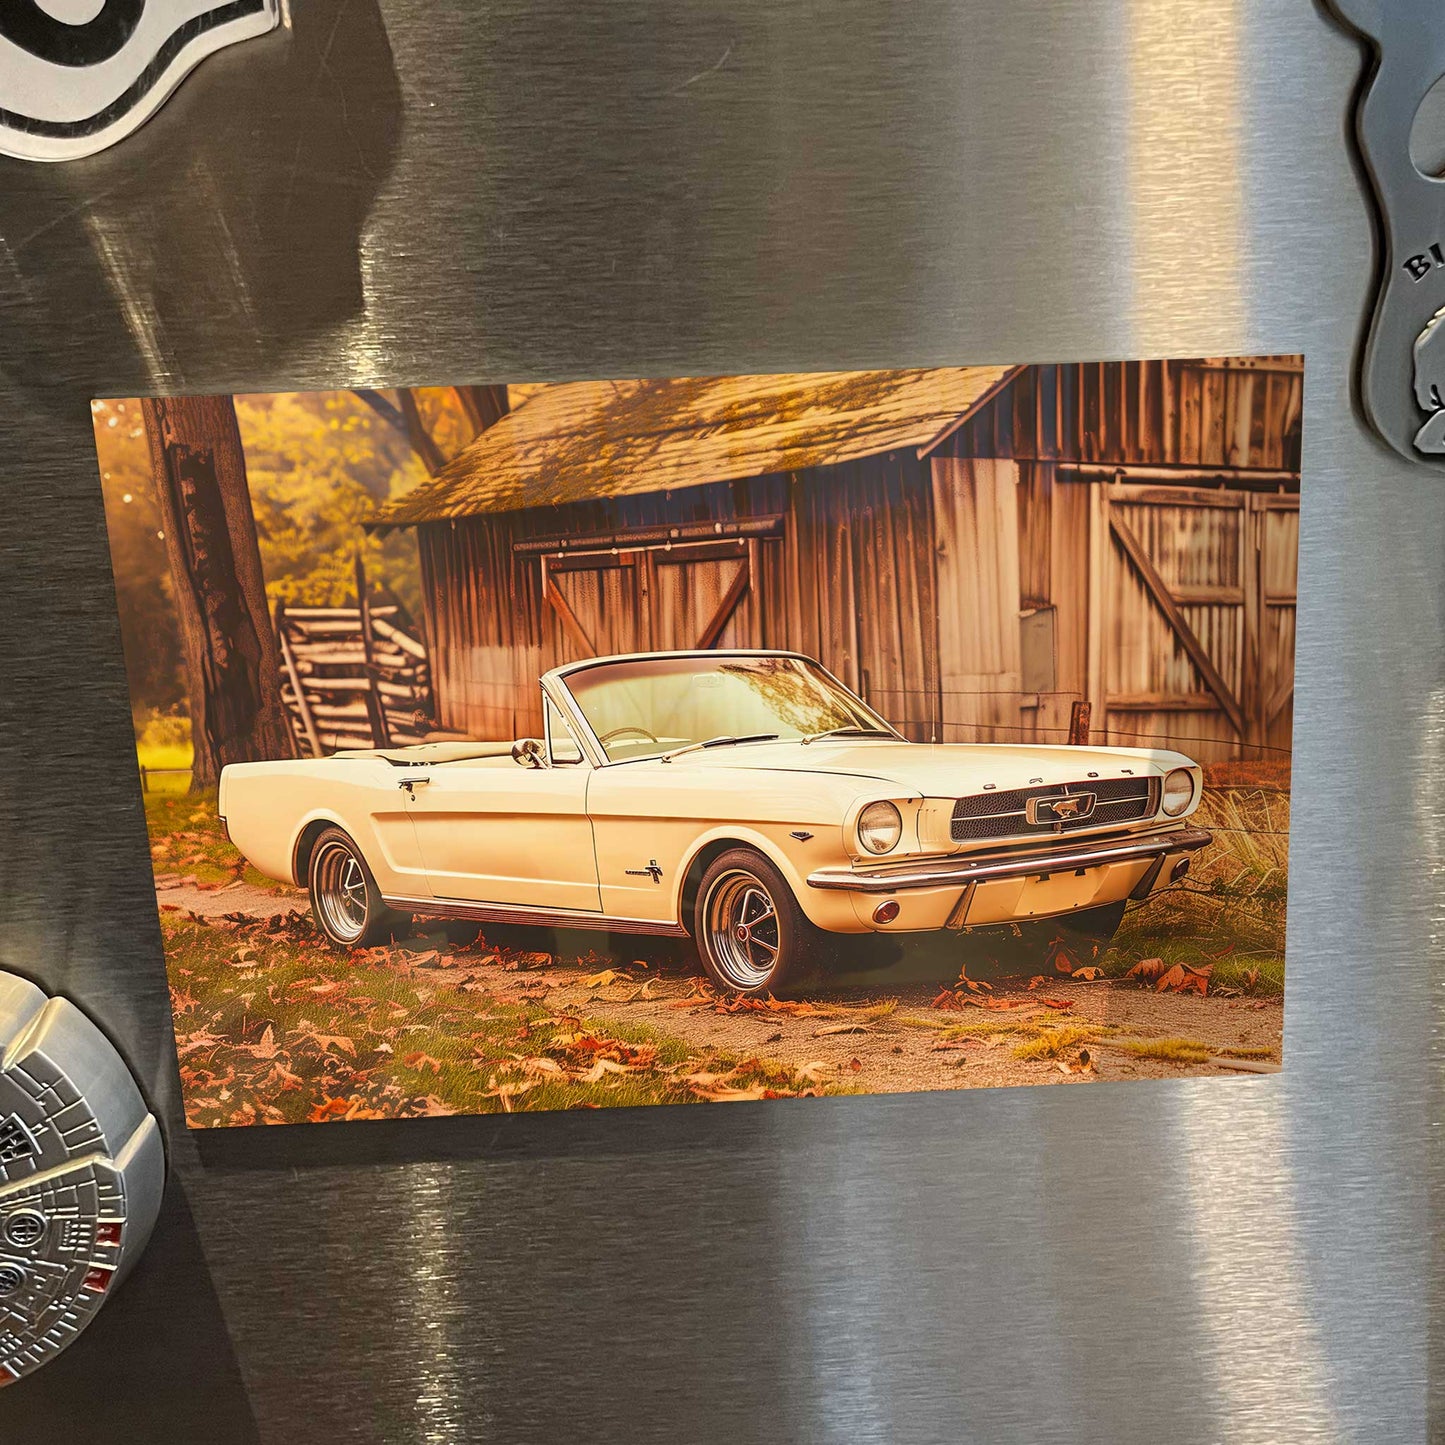 Classic 1964 Ford Mustang Metal Print